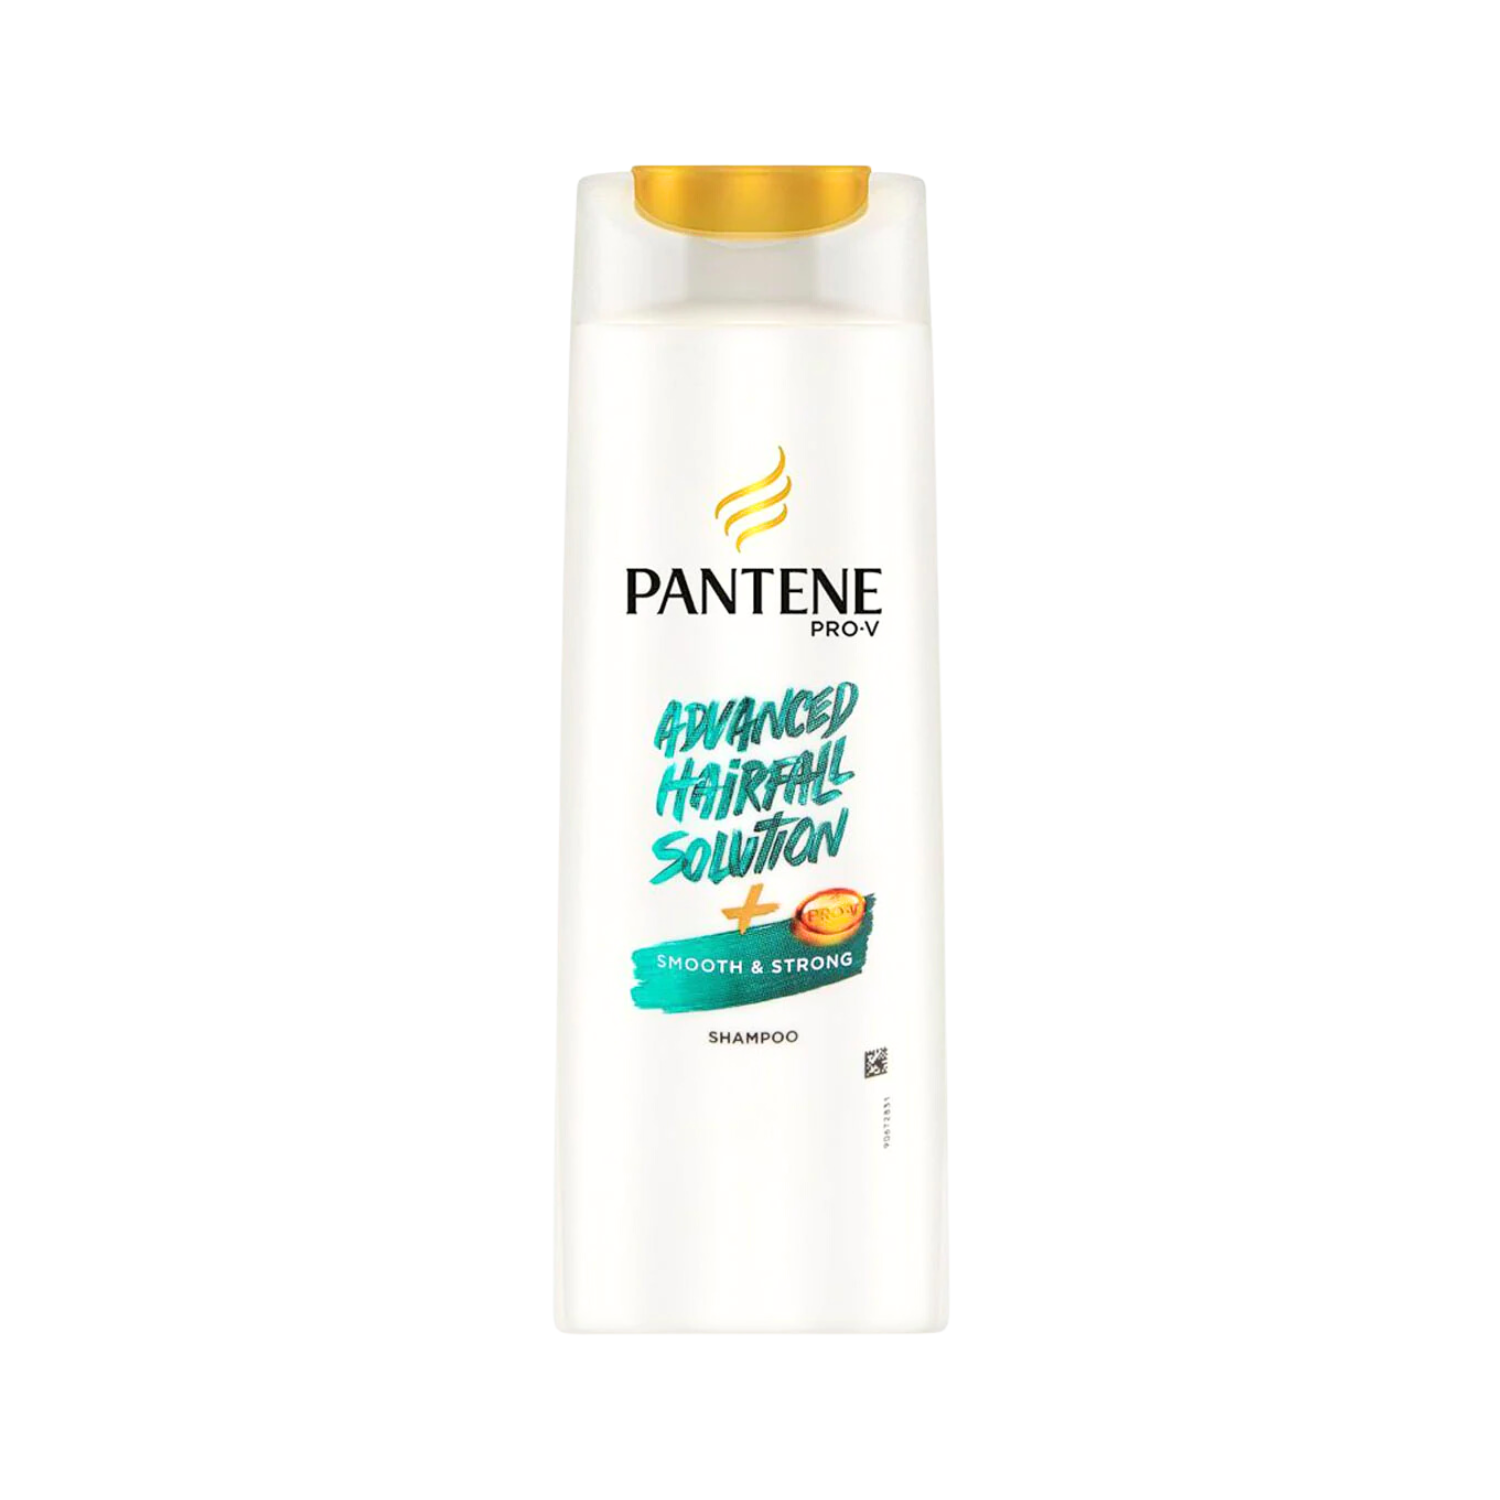 pantene-advanced-hair-fall-solution-smooth-strong-shampoo-185ml